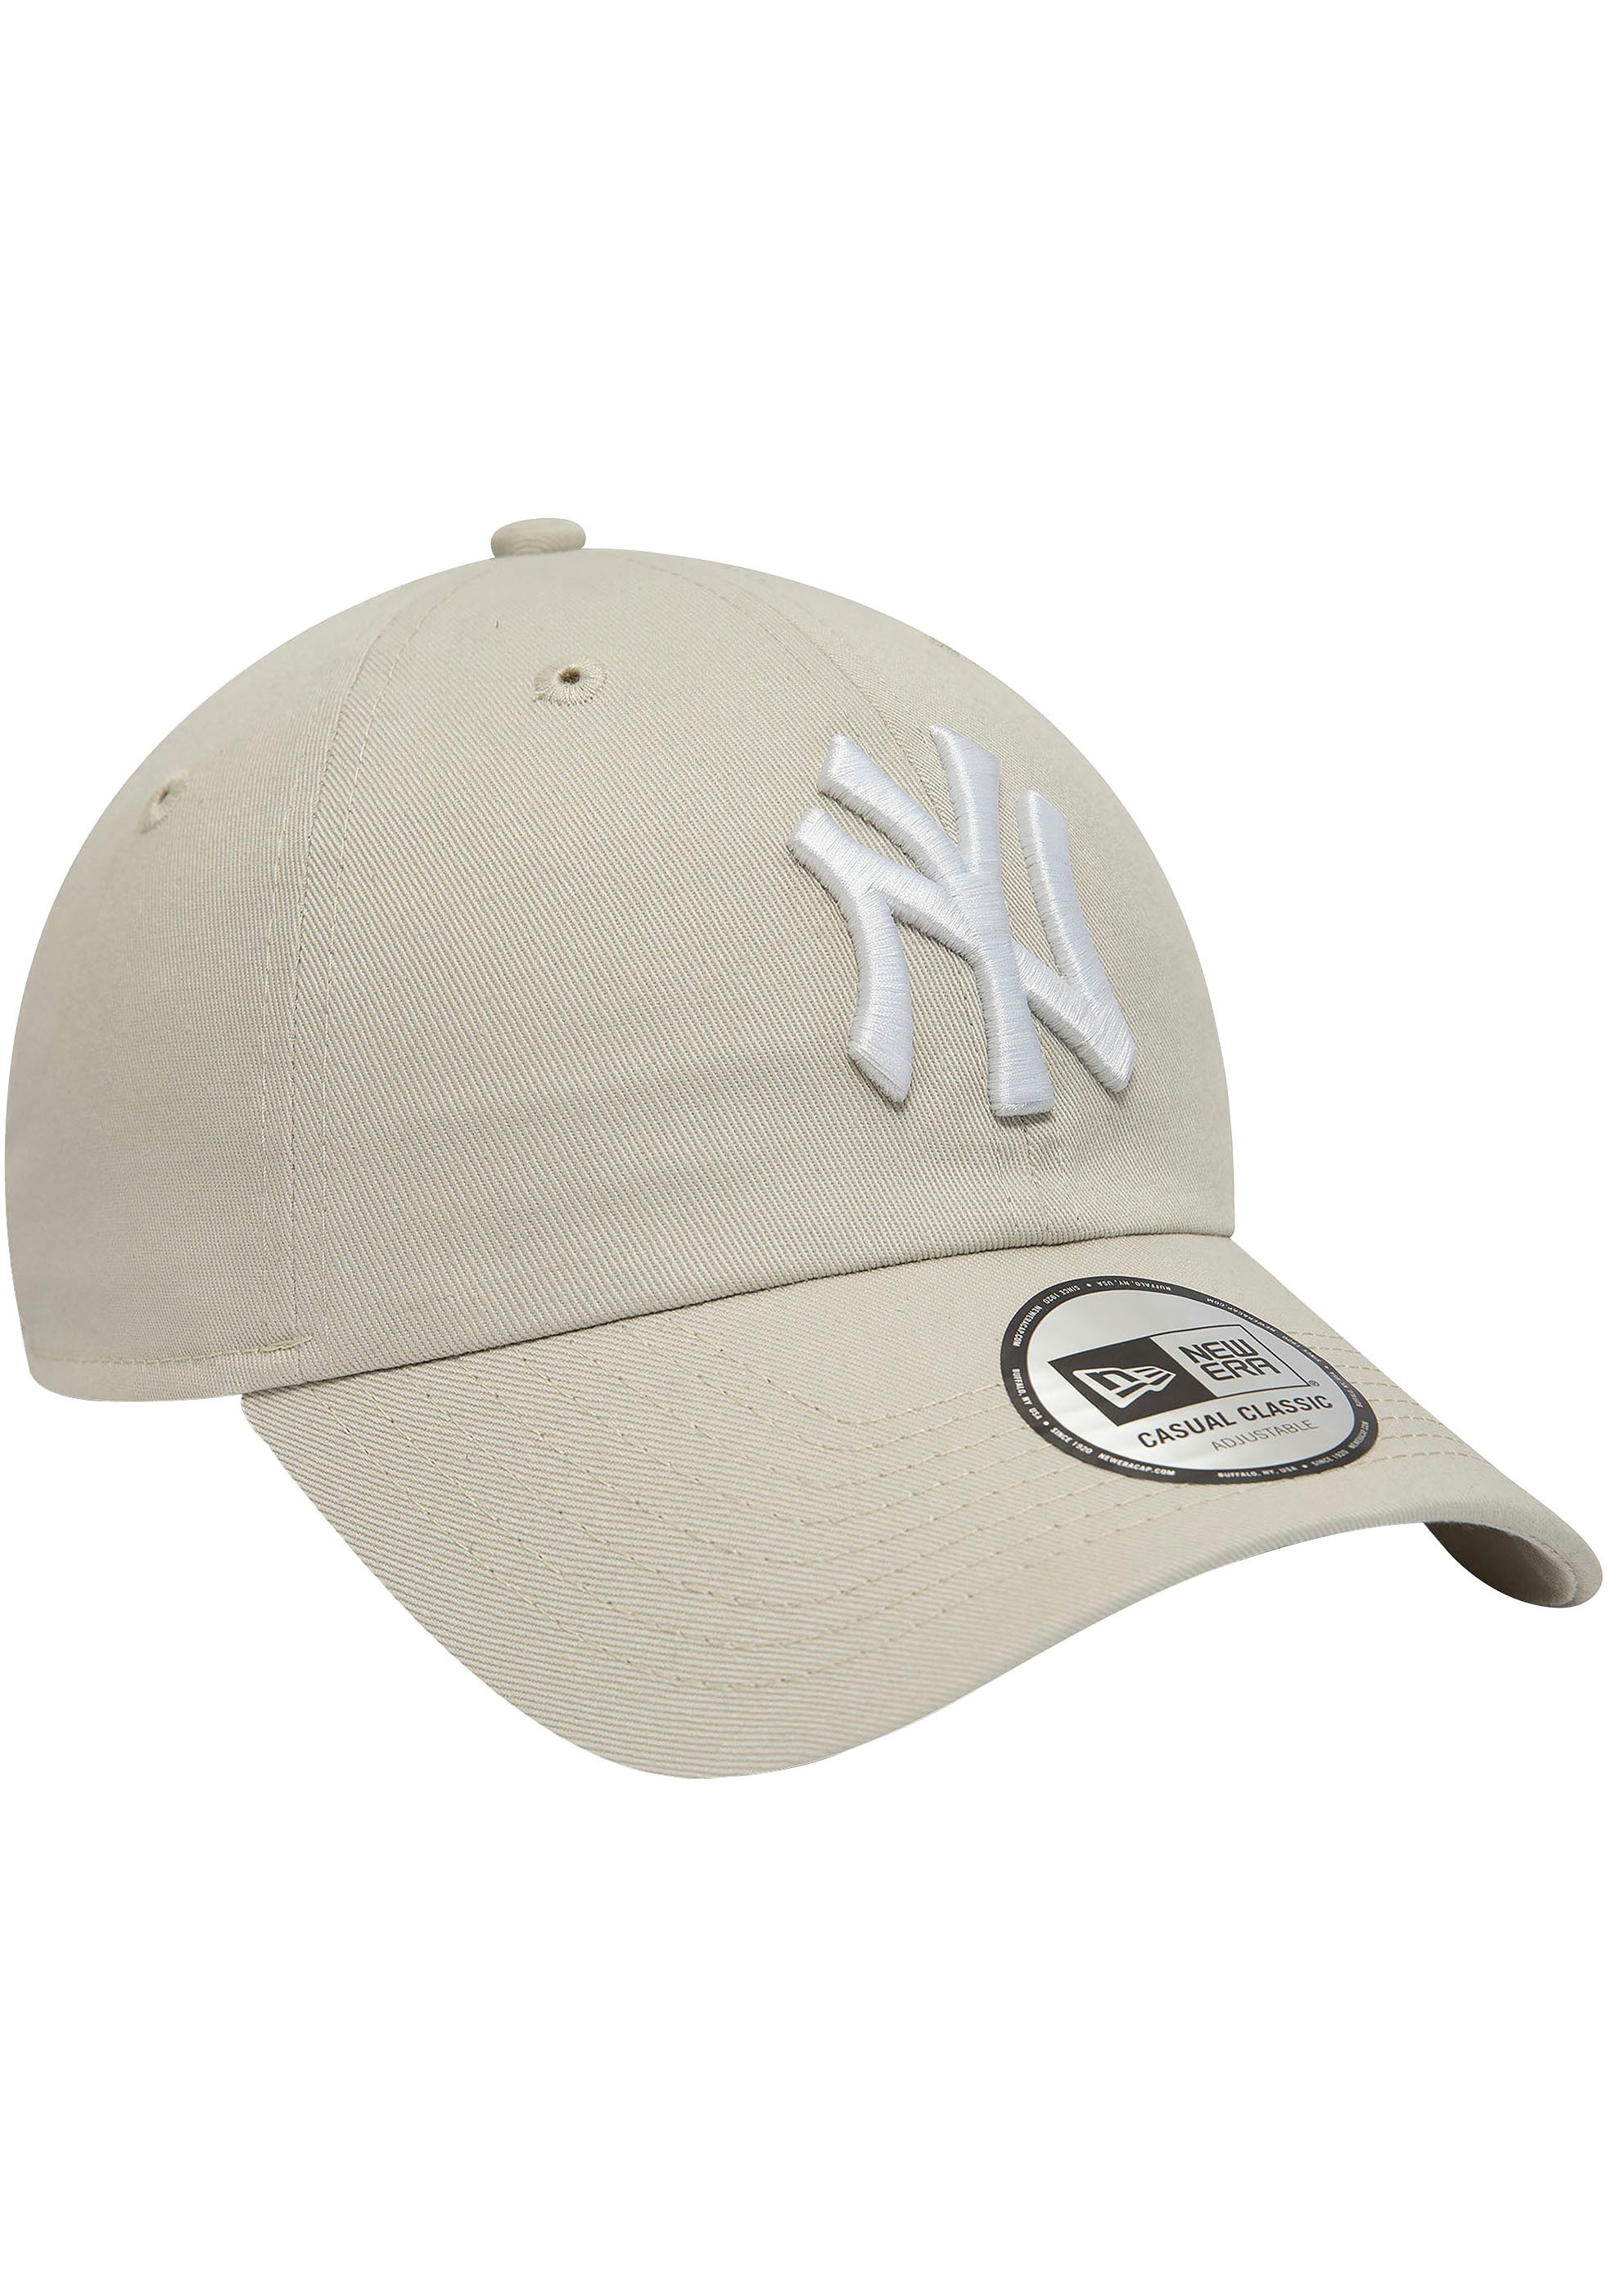 New Cap Era | New kaufen online I\'m Cap »Baseball NY« Baseball Cap walking Era 940Leag